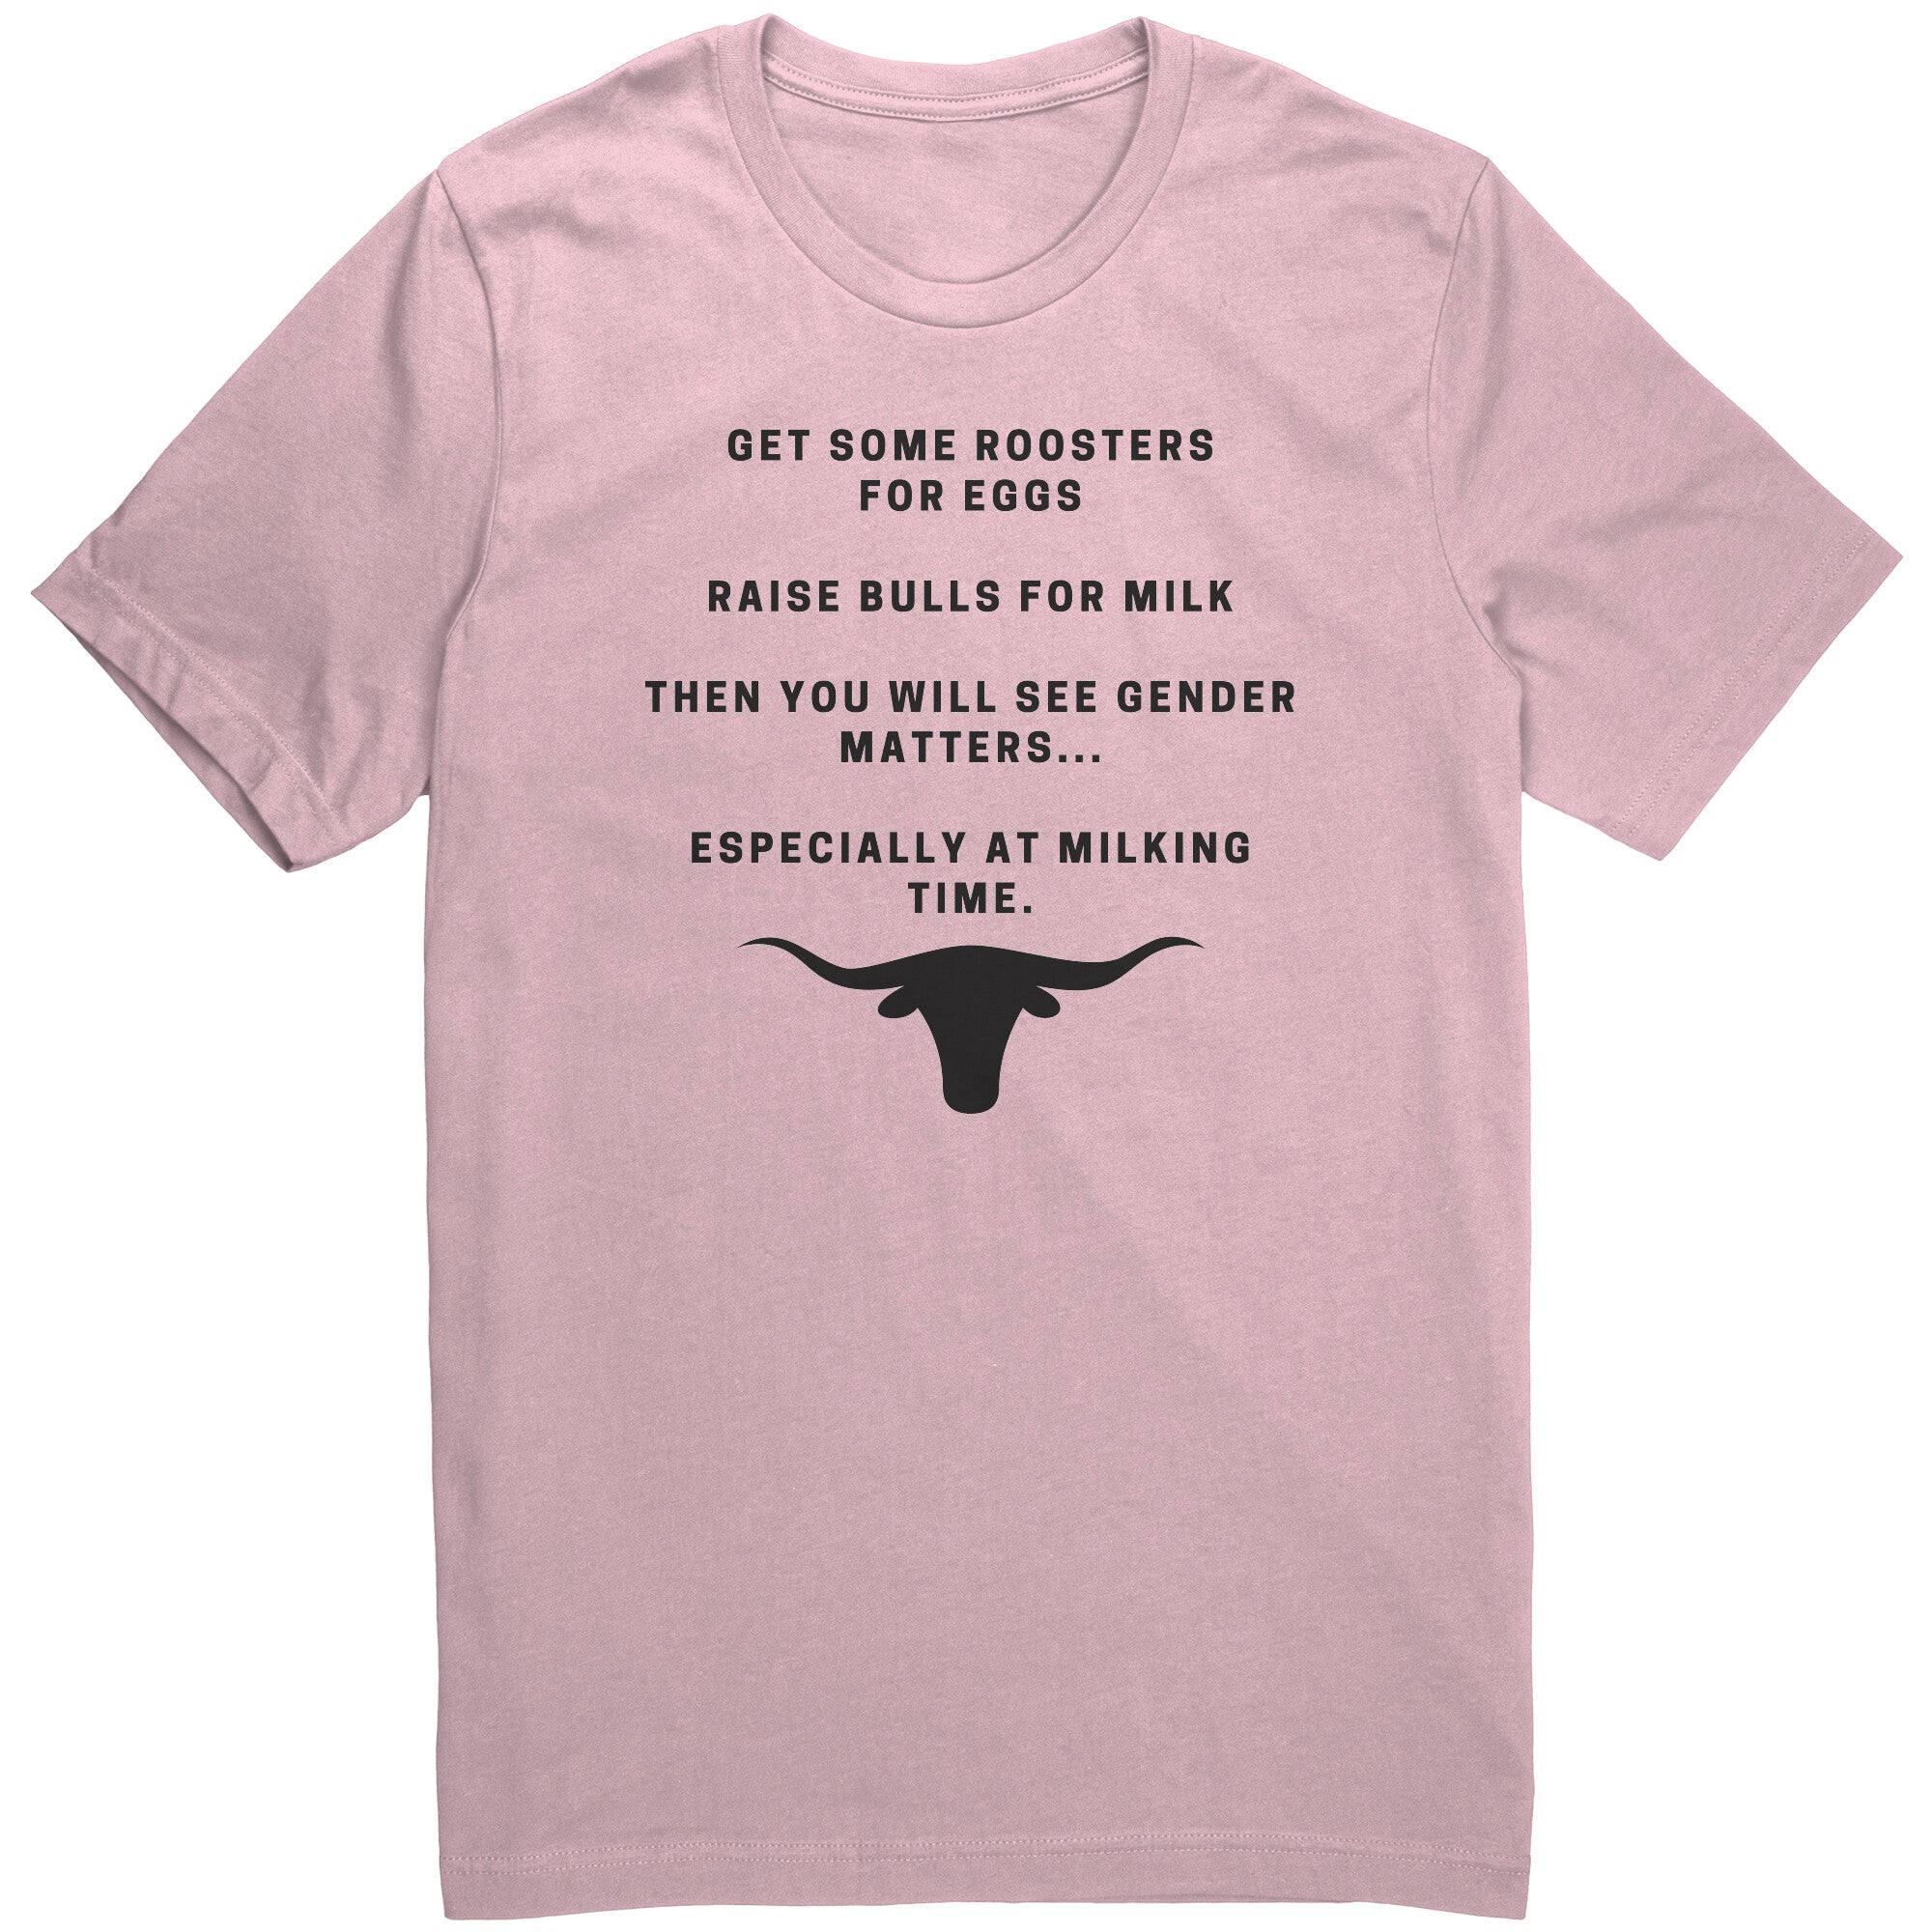 Funny Mens Shirt, Sarcastic Shirt For Men, Novelty Shirts, Offensive Shirt Milk A Bull Gender Matters Unisex Tee pink